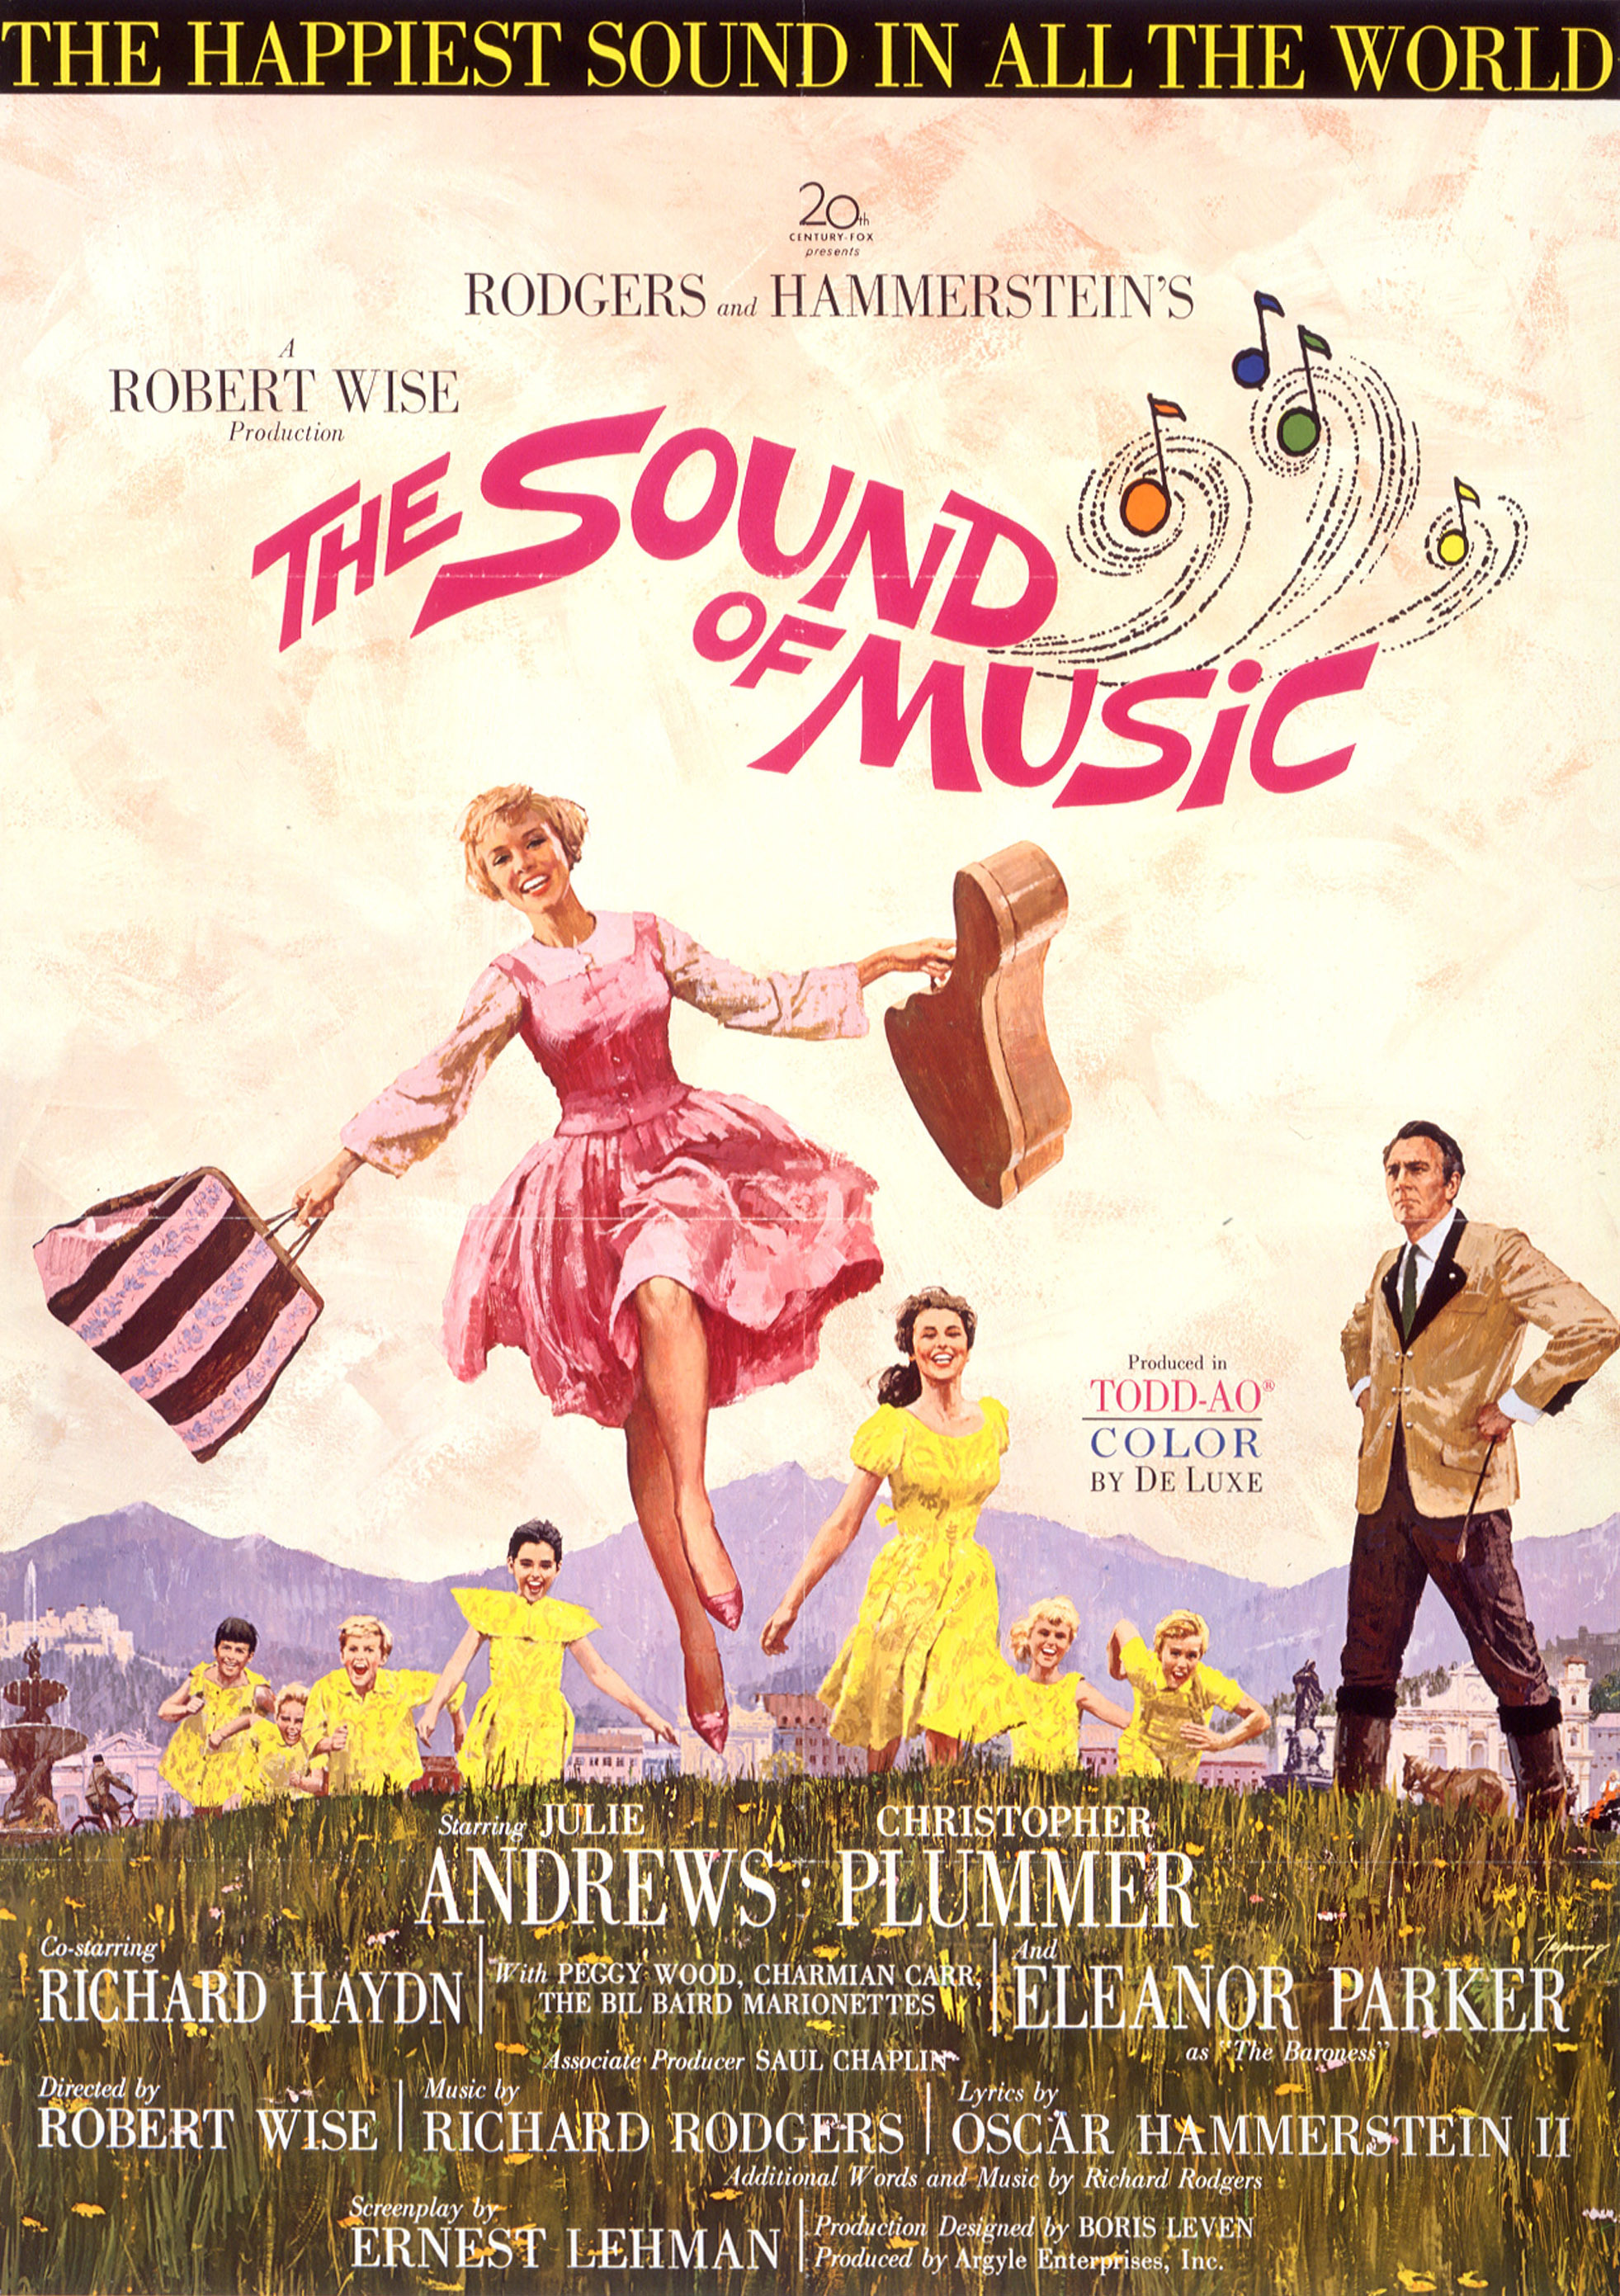 Nonton film The Sound Of Music layarkaca21 indoxx1 ganool online streaming terbaru